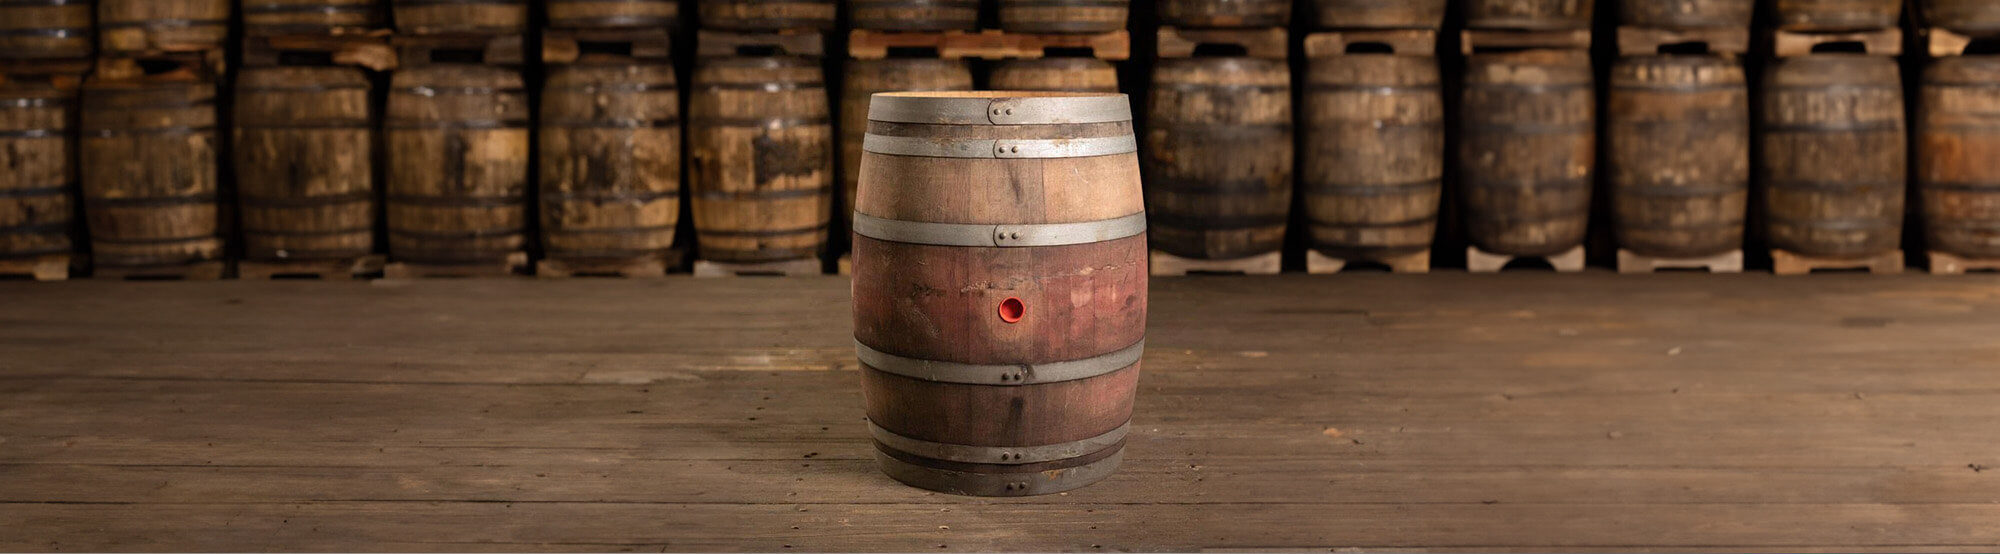 Used red wine barrel